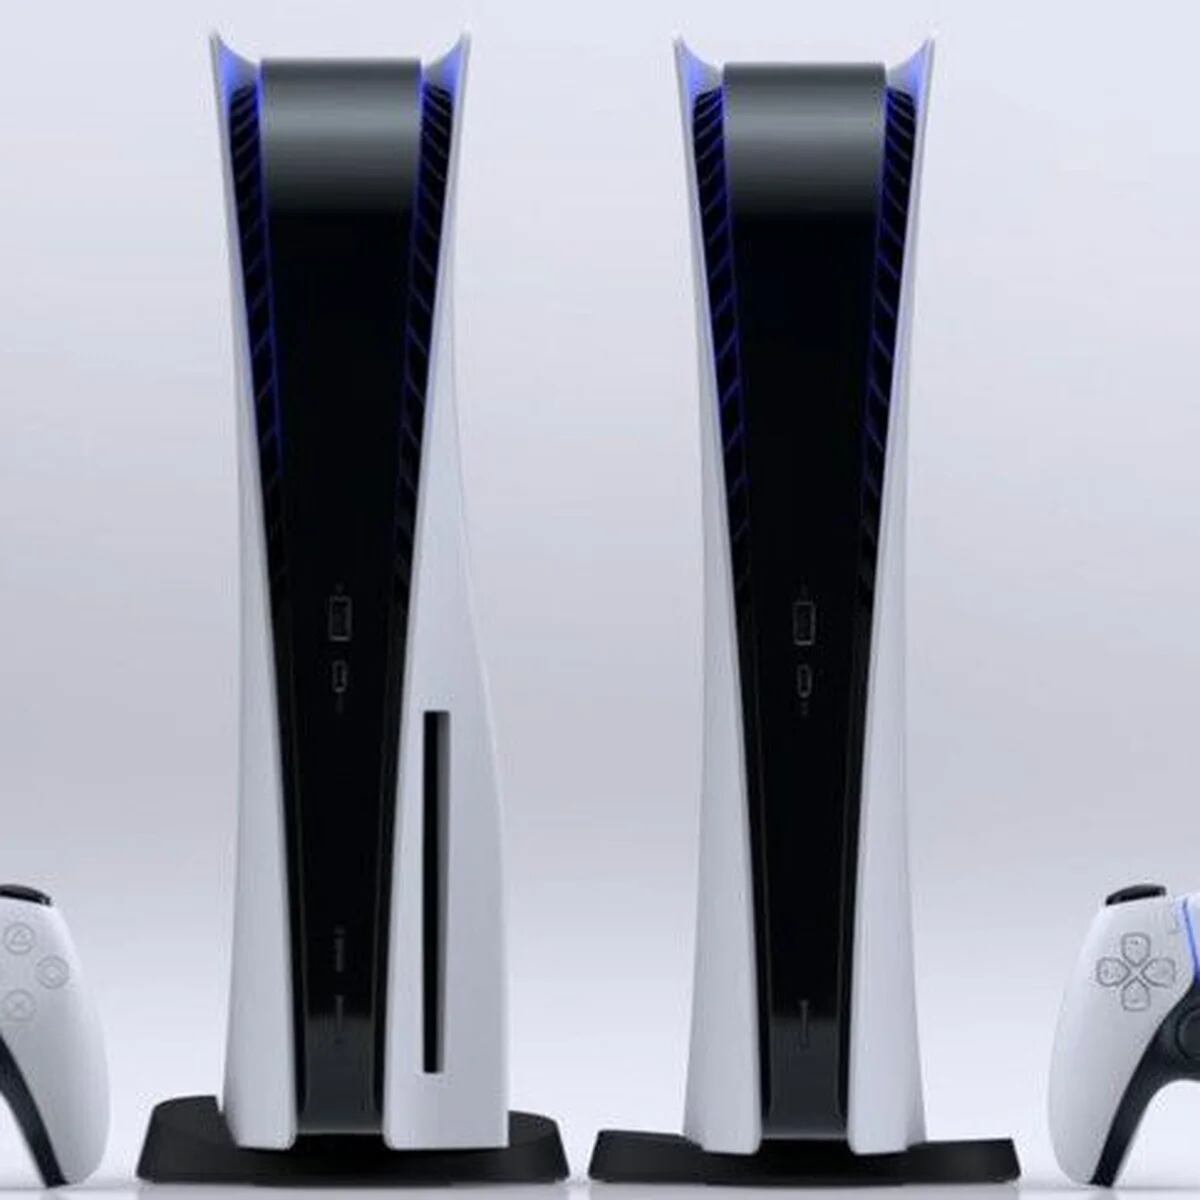 PlayStation 5 vai ter processador de 8 núcleos e 16 threads (AMD Ryzen)